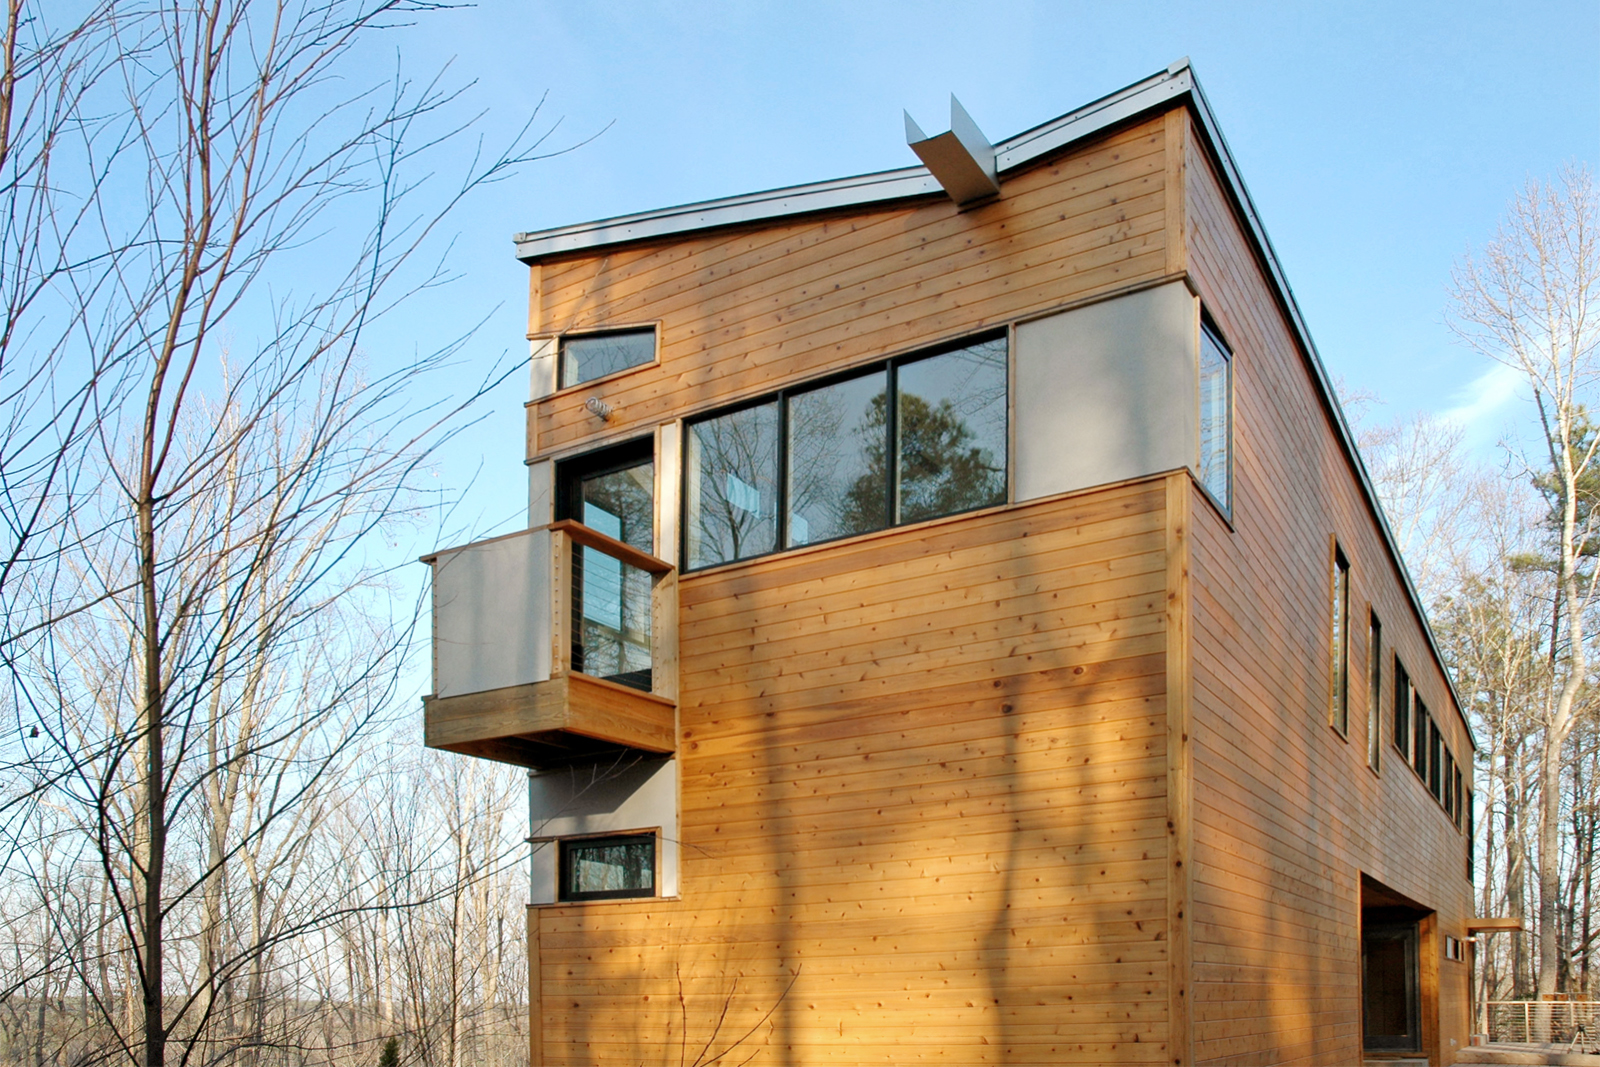 02-res4-resolution-4-architecture-modern-modular-house-prefab-dwell-home-exterior.jpg